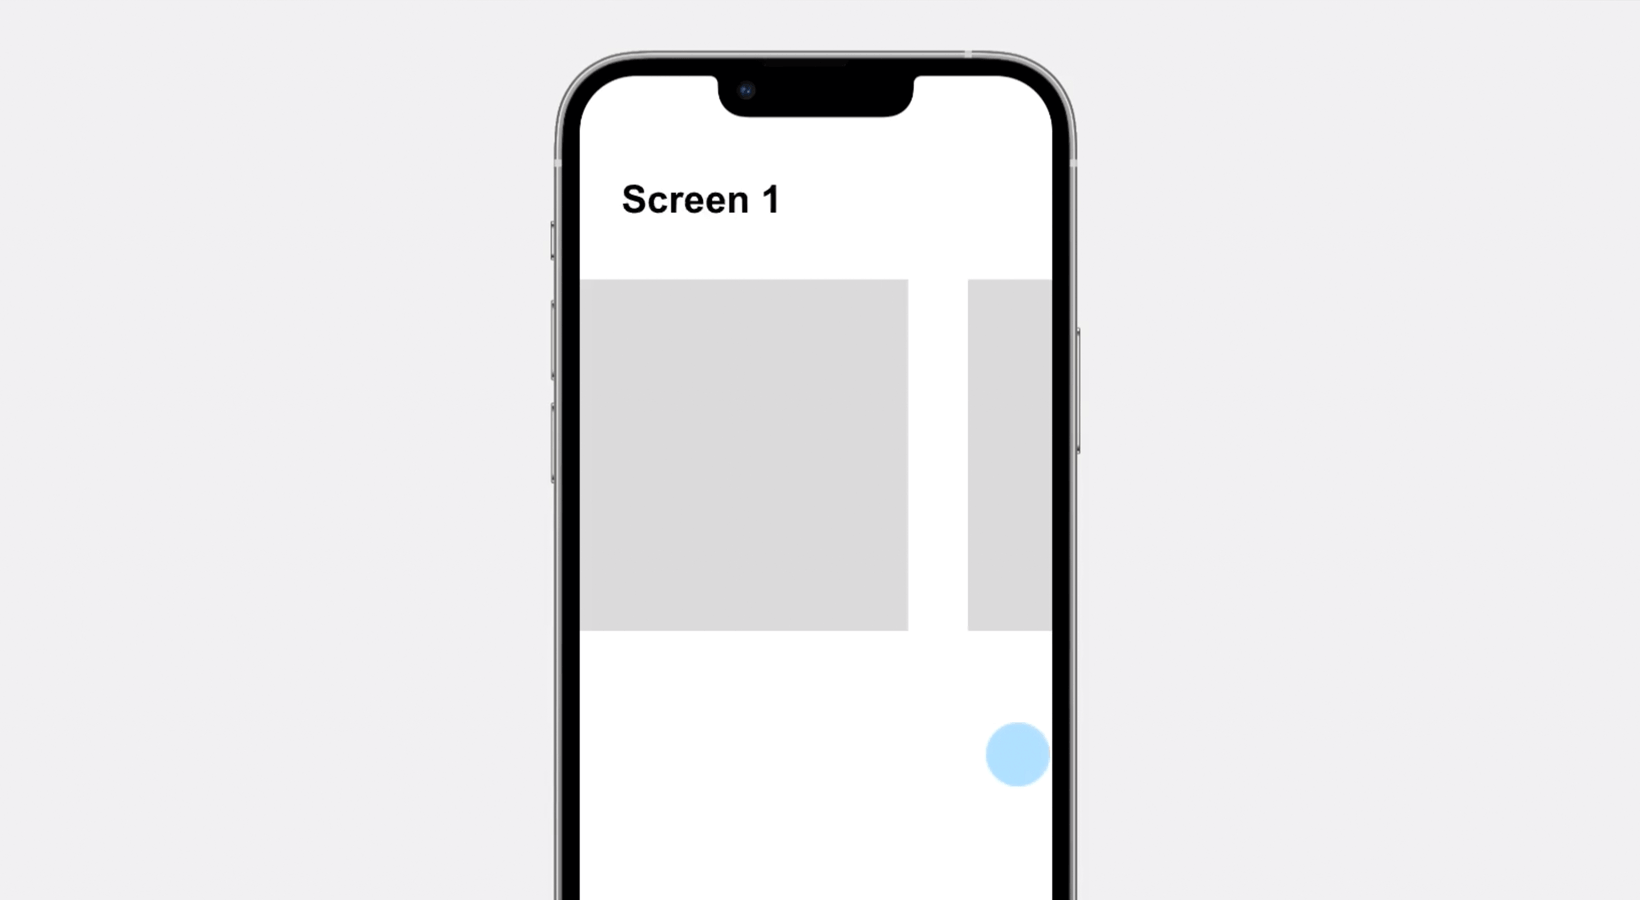 Swipe through screens